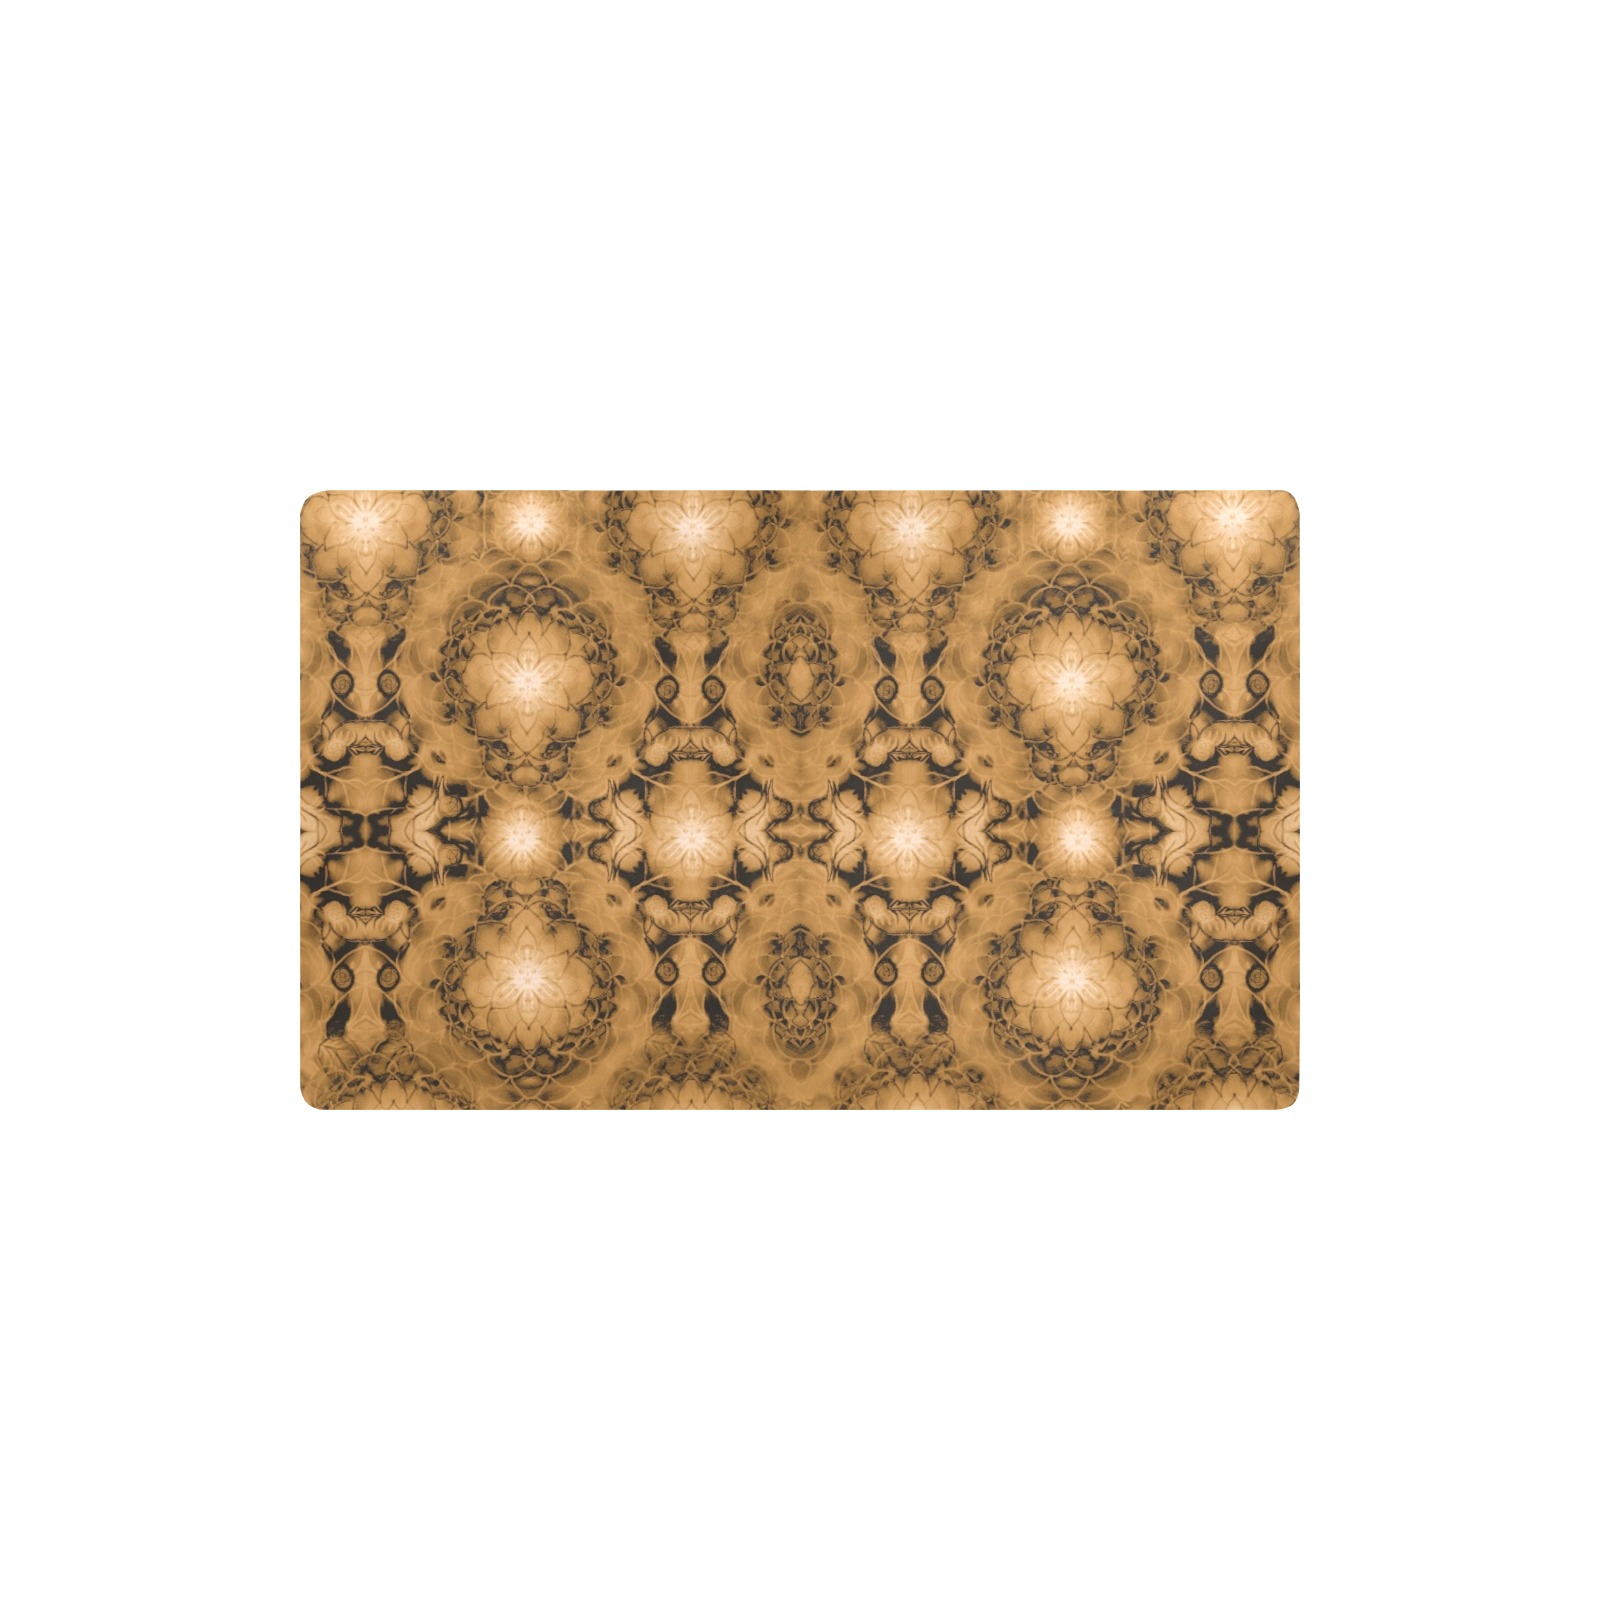 Nidhi decembre 2014-pattern 7-44x55 inches-brown Kitchen Mat 32"x20"